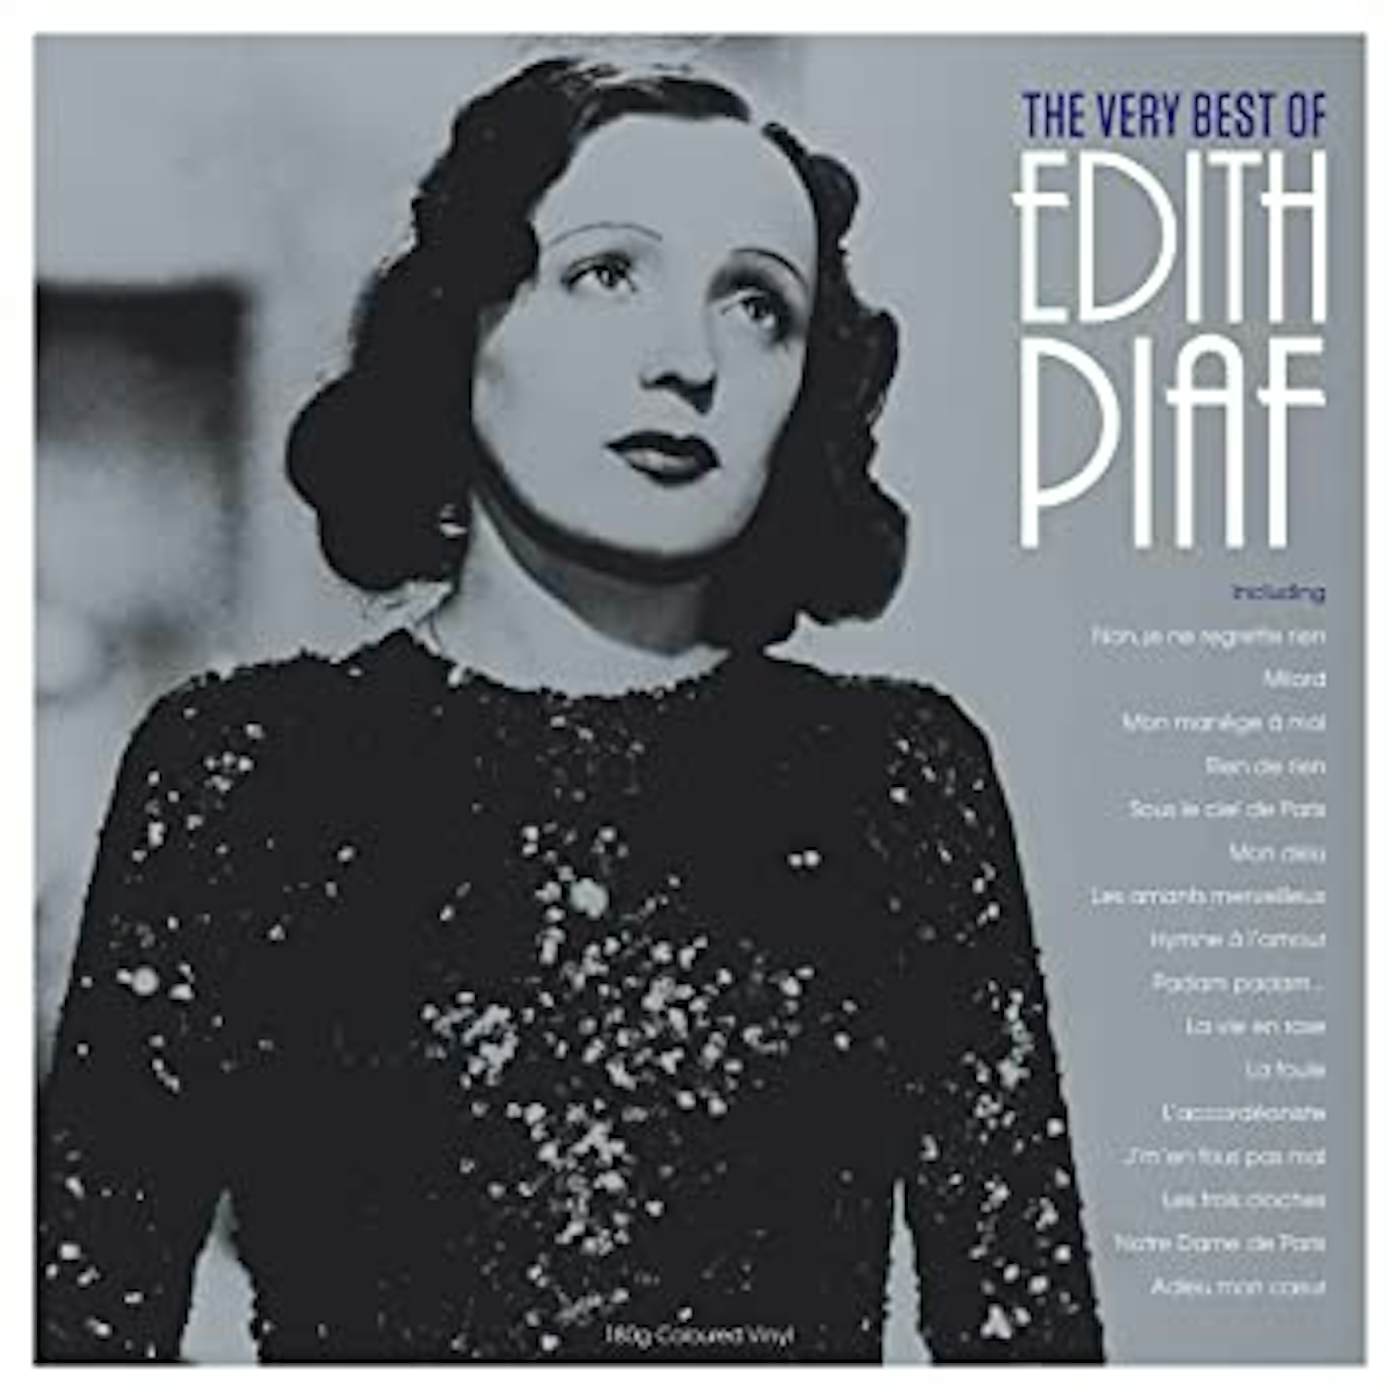 Édith Piaf VERY BEST OF Vinyl Record